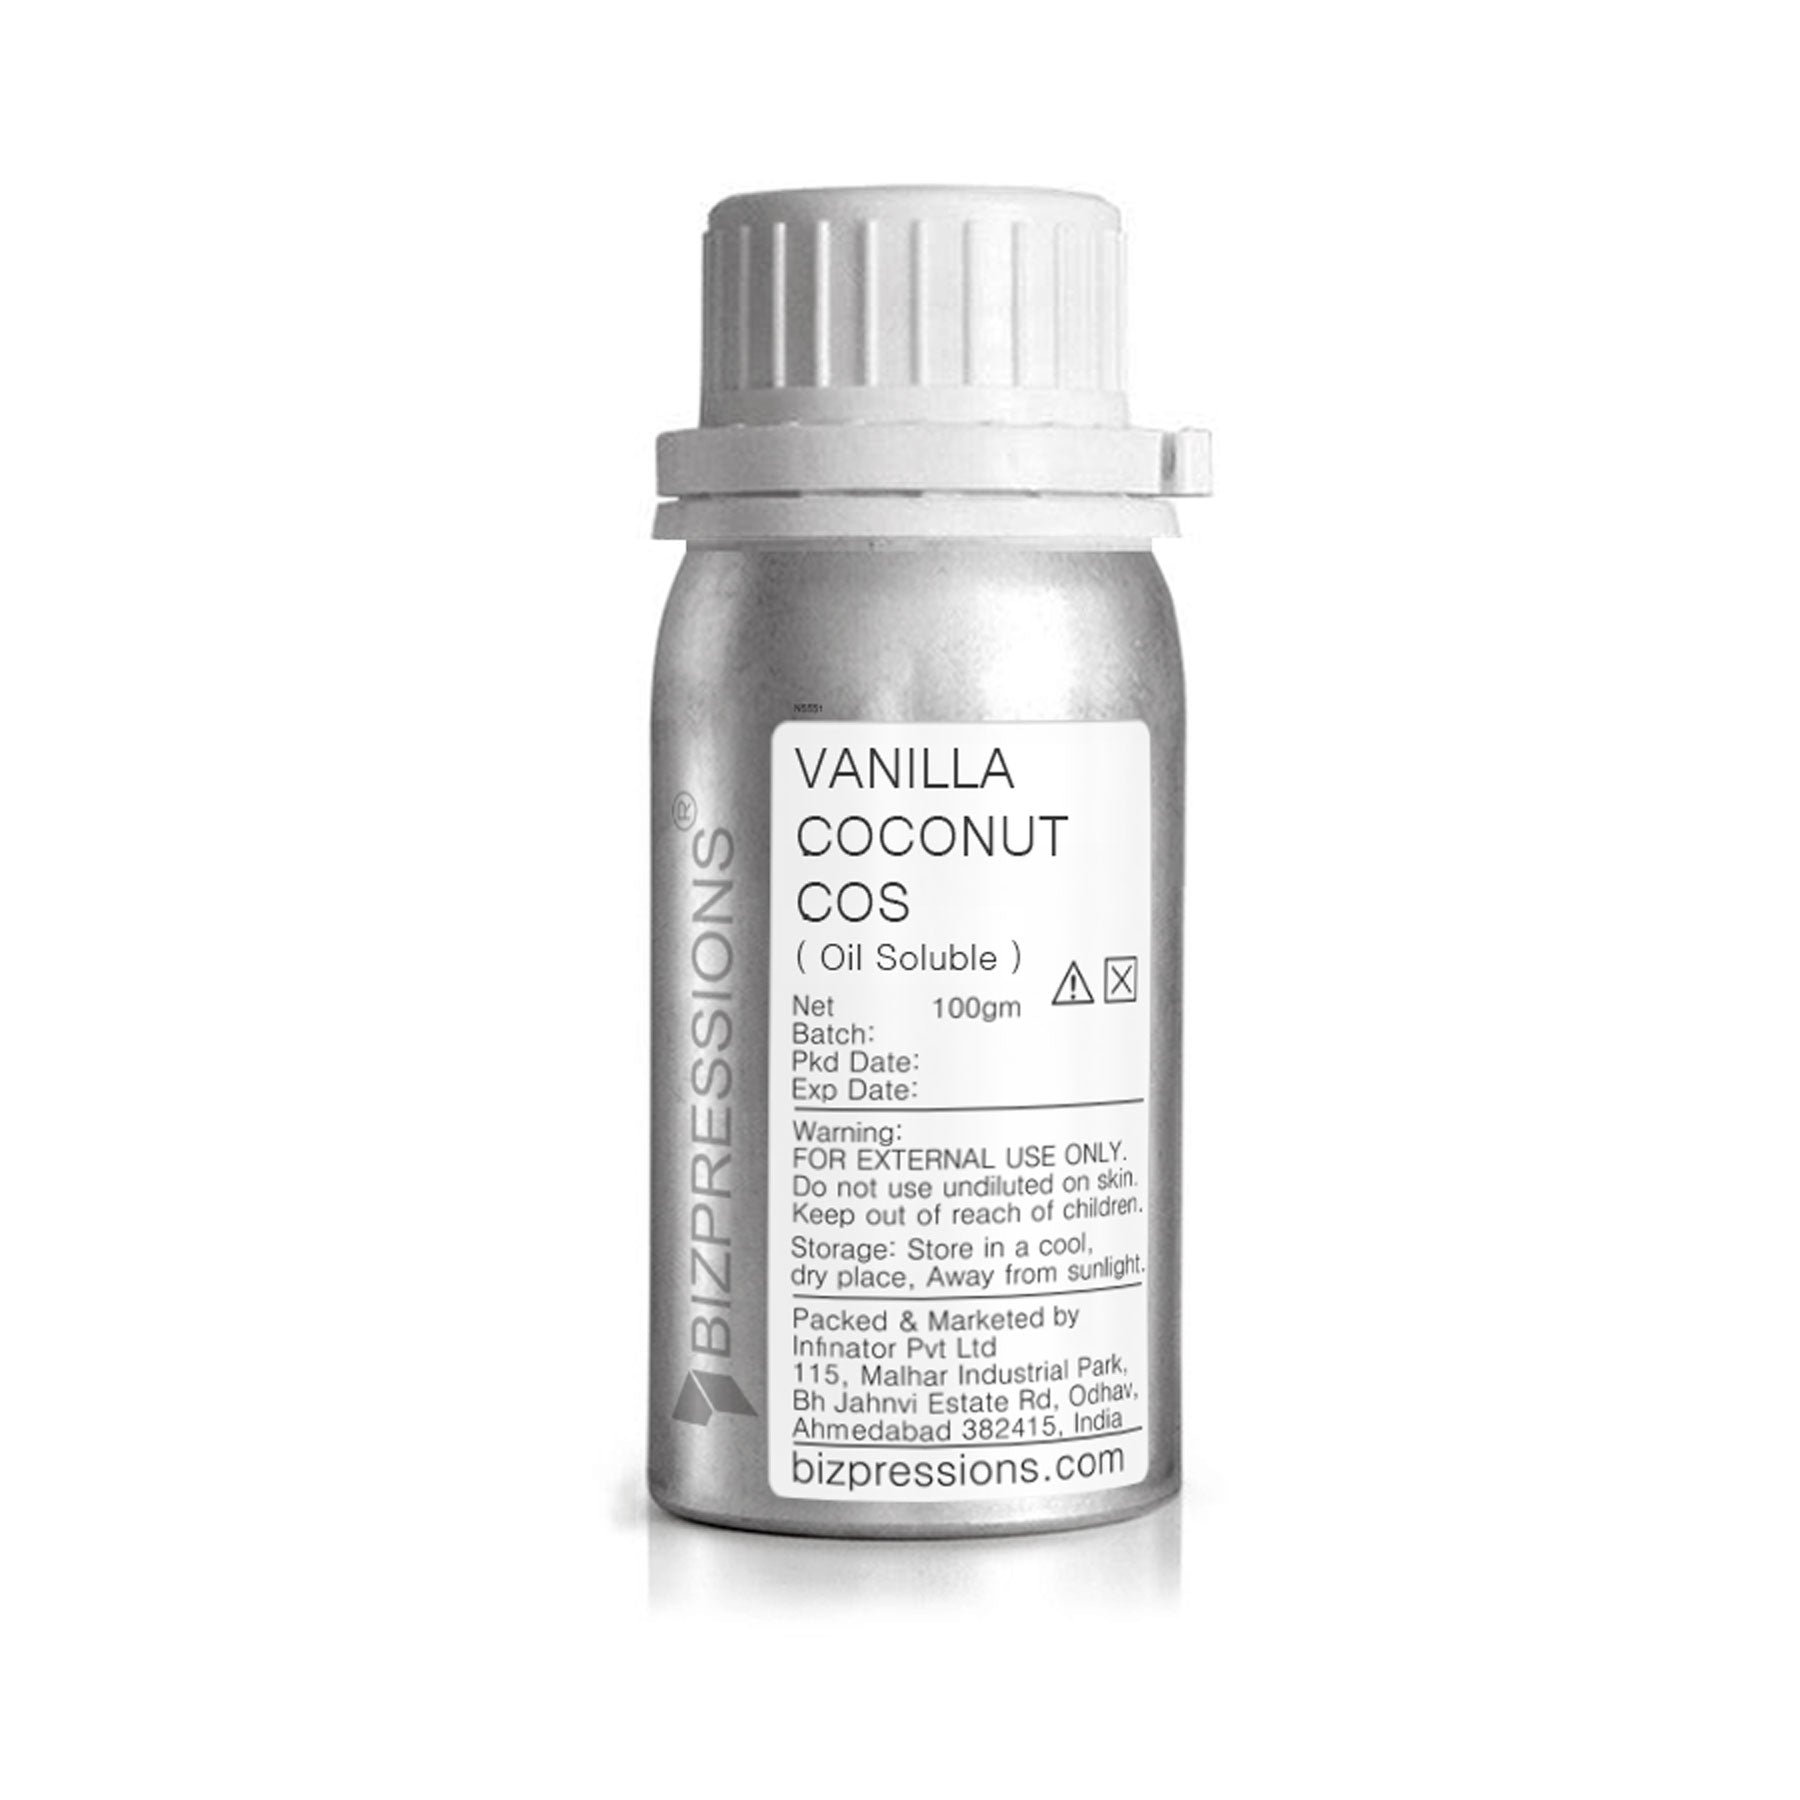 VANILLA COCONUT COS - Fragrance ( Oil Soluble ) 100 gm